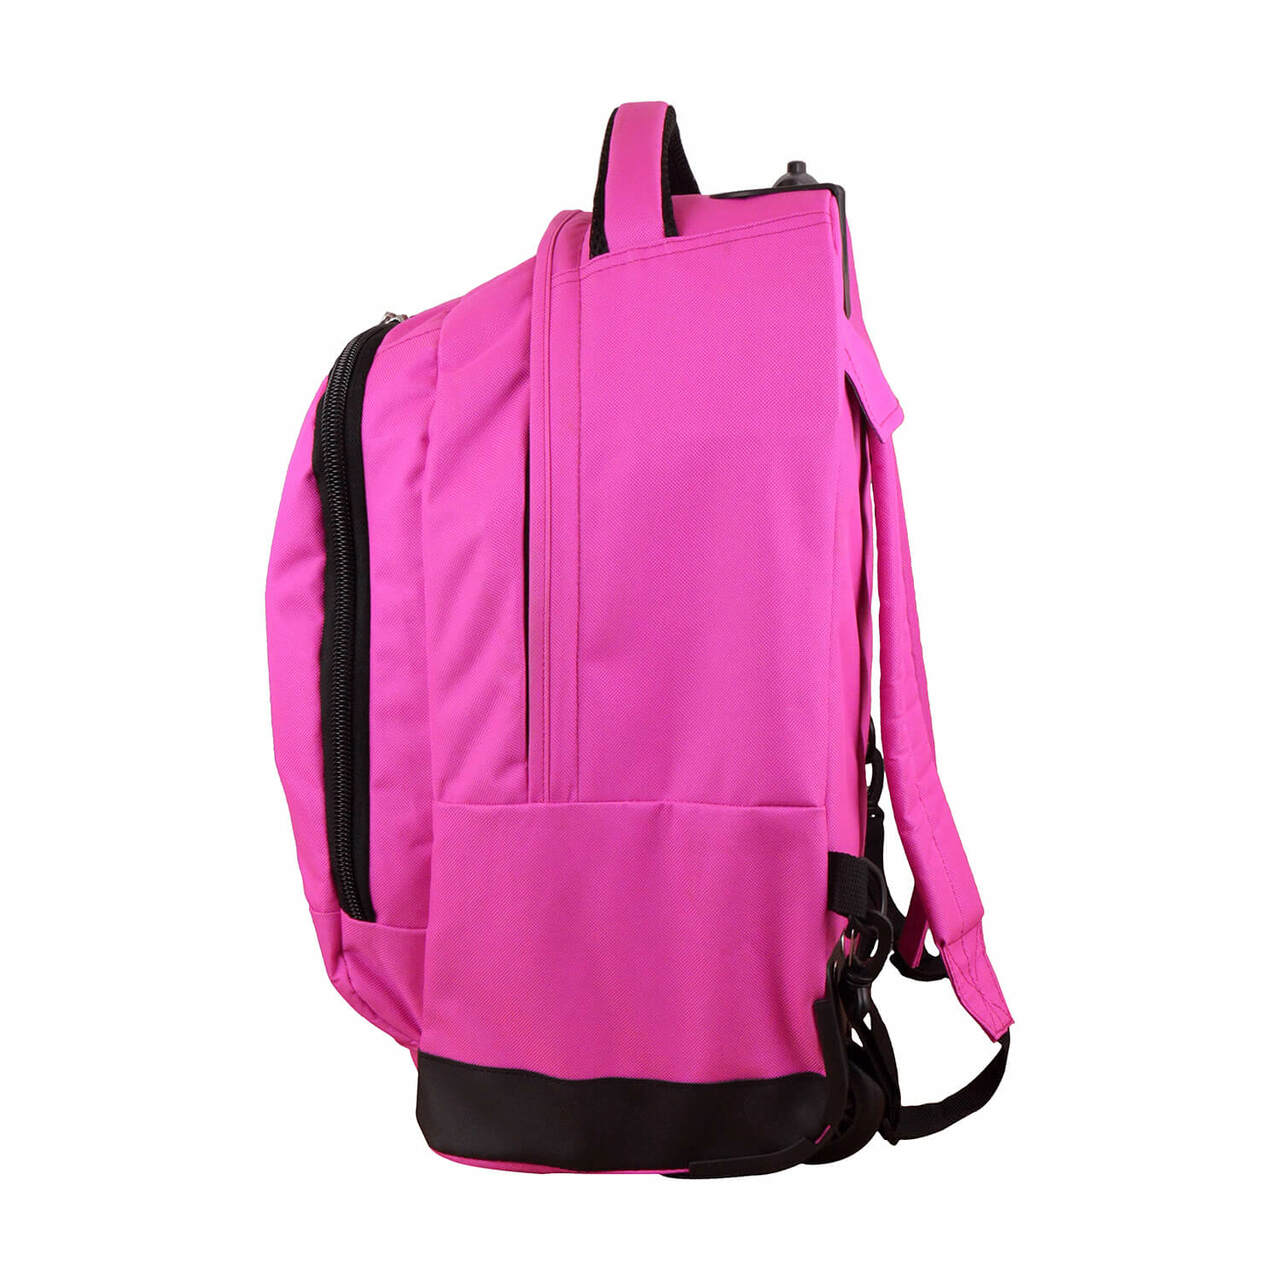 Washington Commanders Premium Wheeled Backpack in Pink